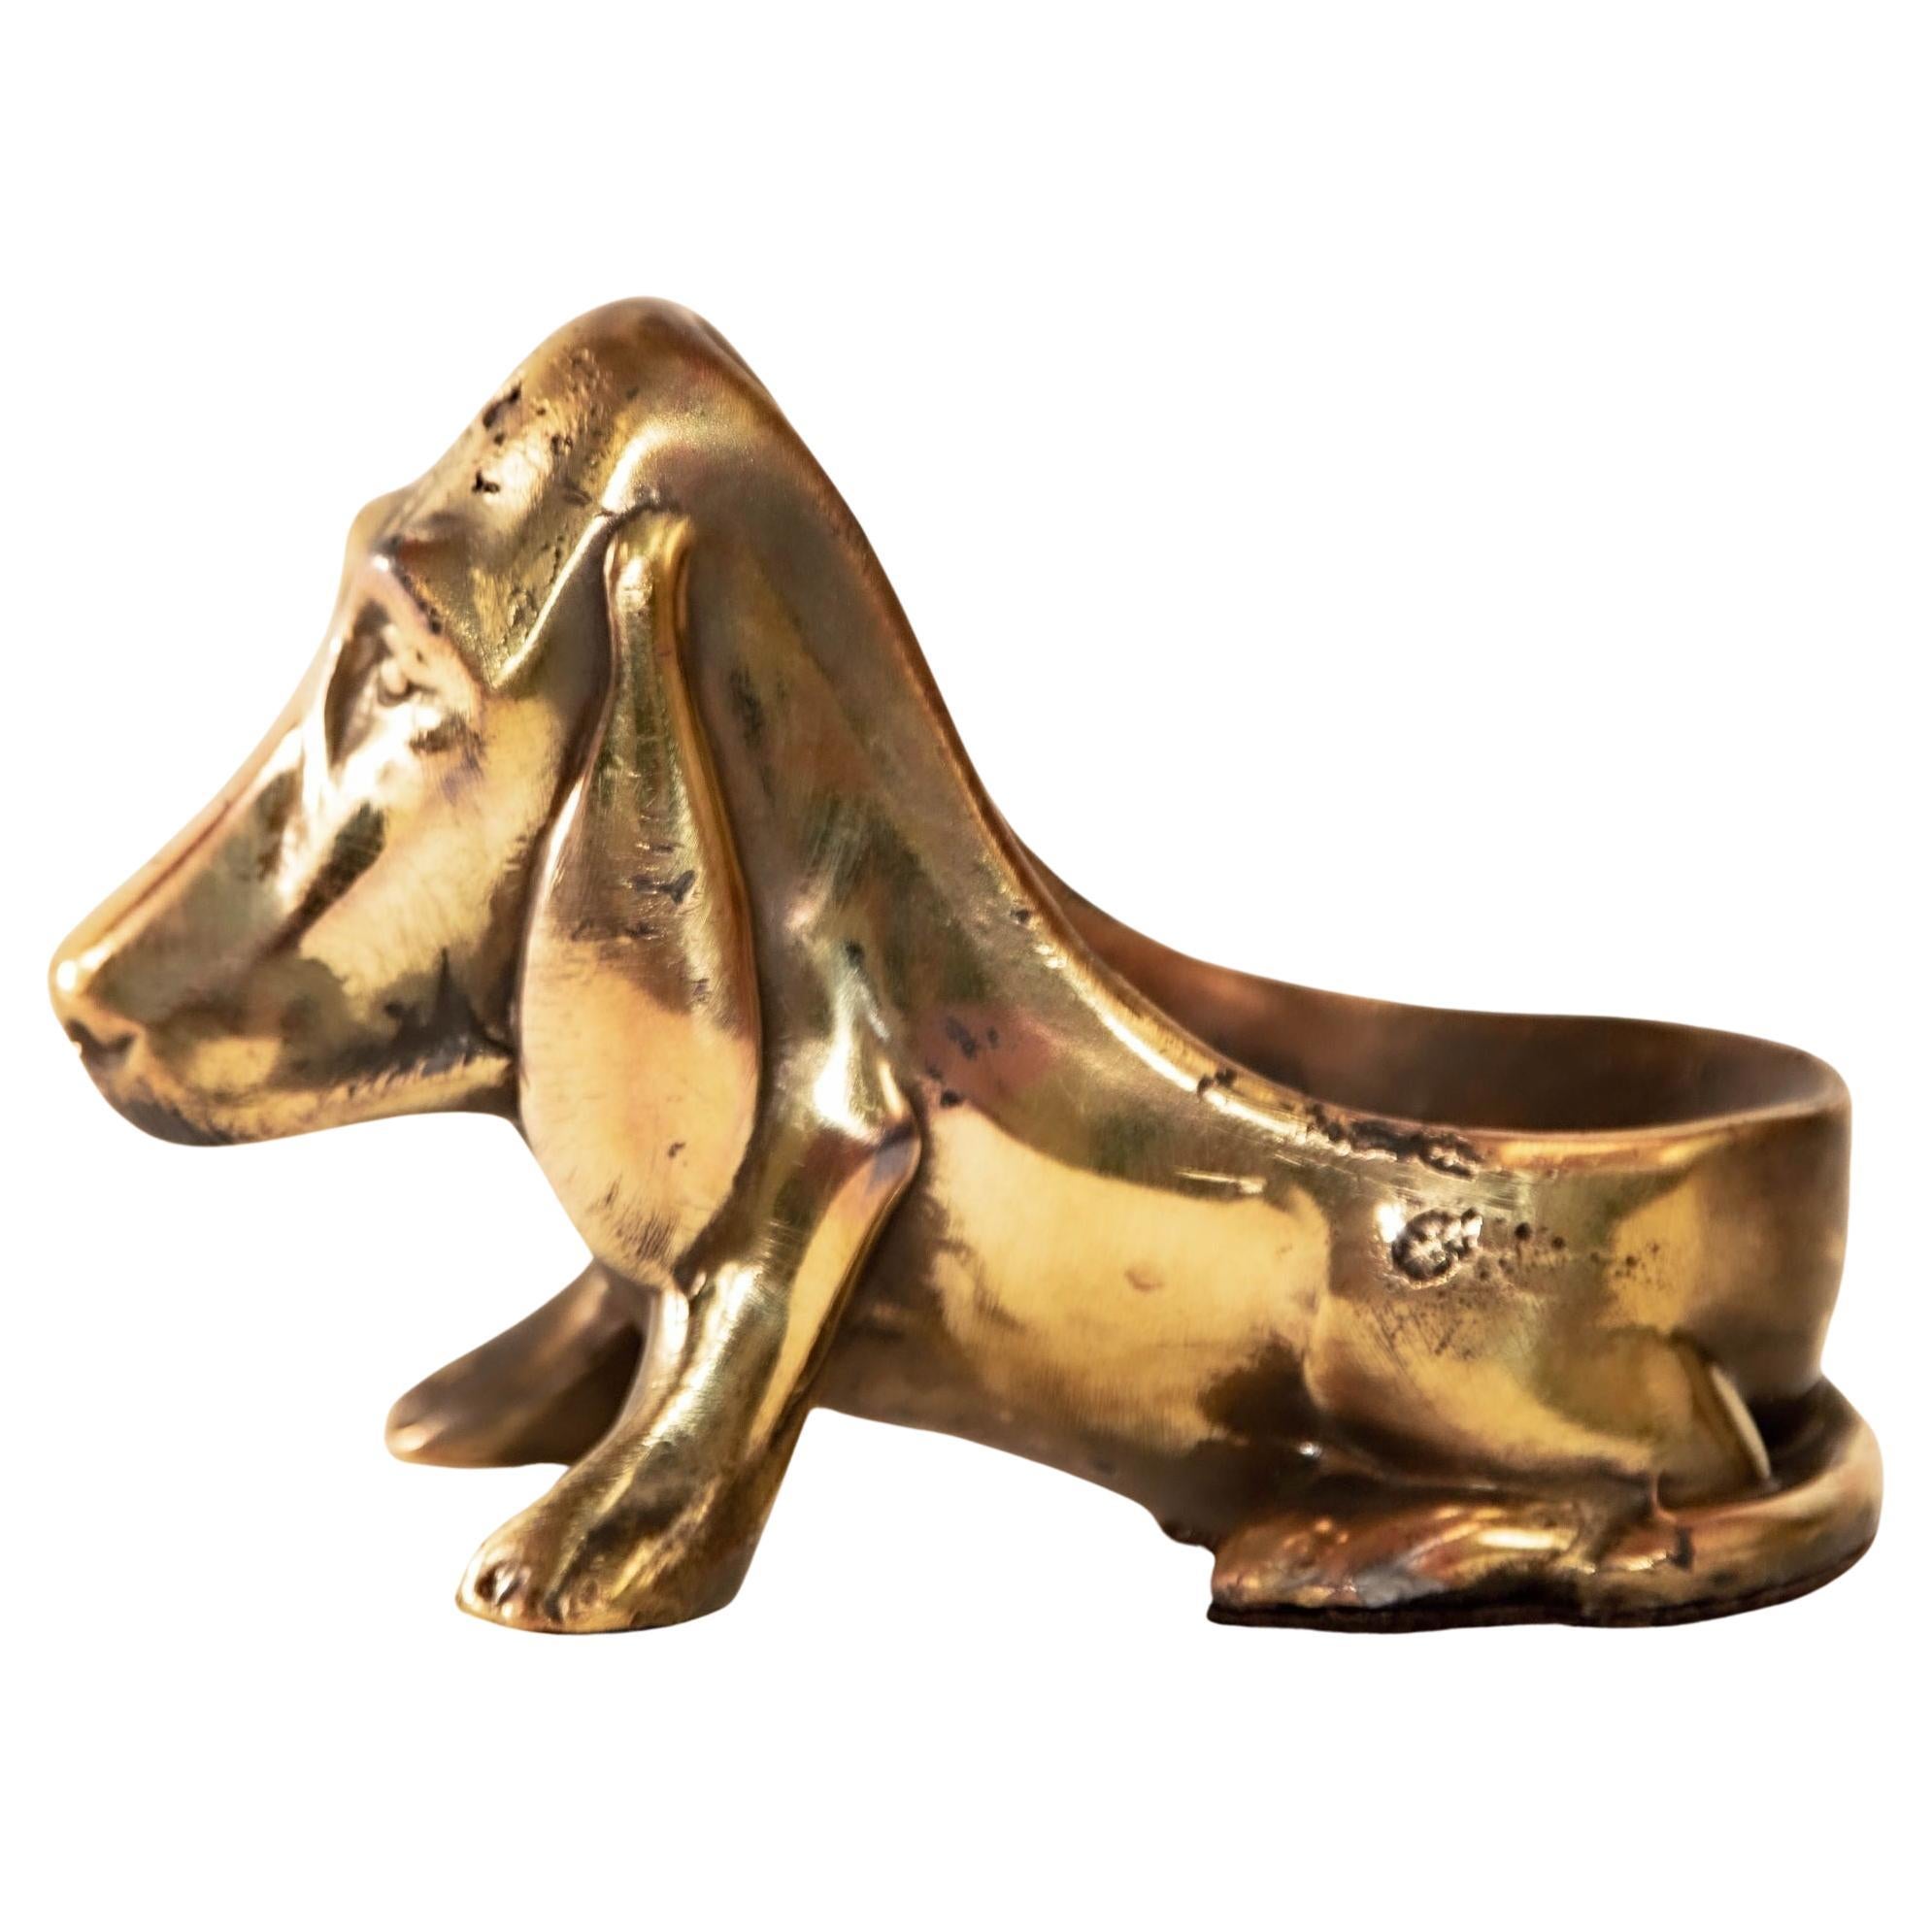 Antique Brass Basset Dog Pipe Holder